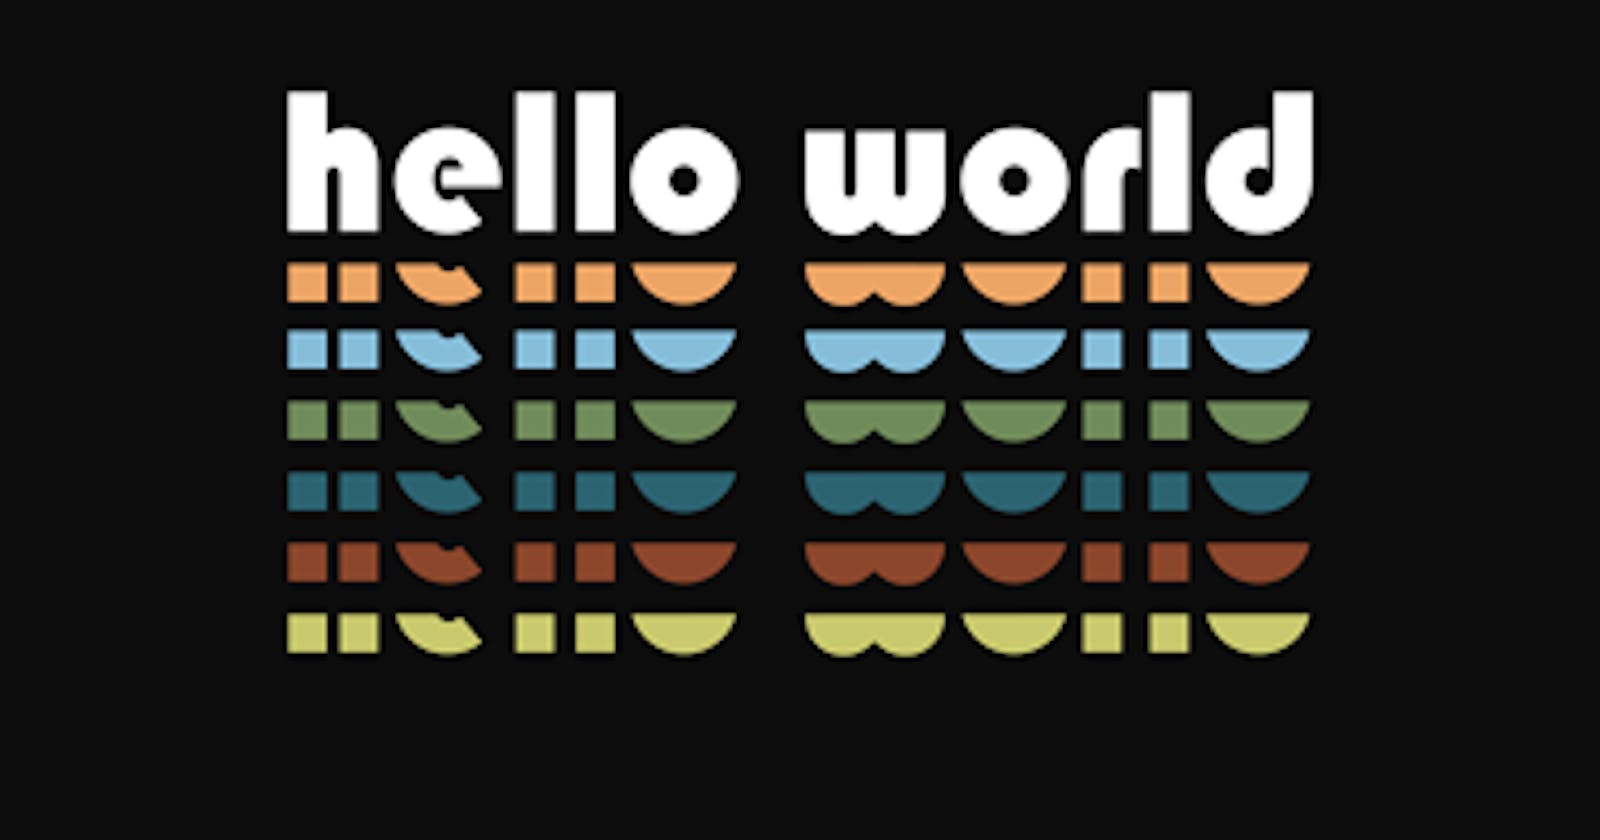 Why we always start with "Hello World!"?